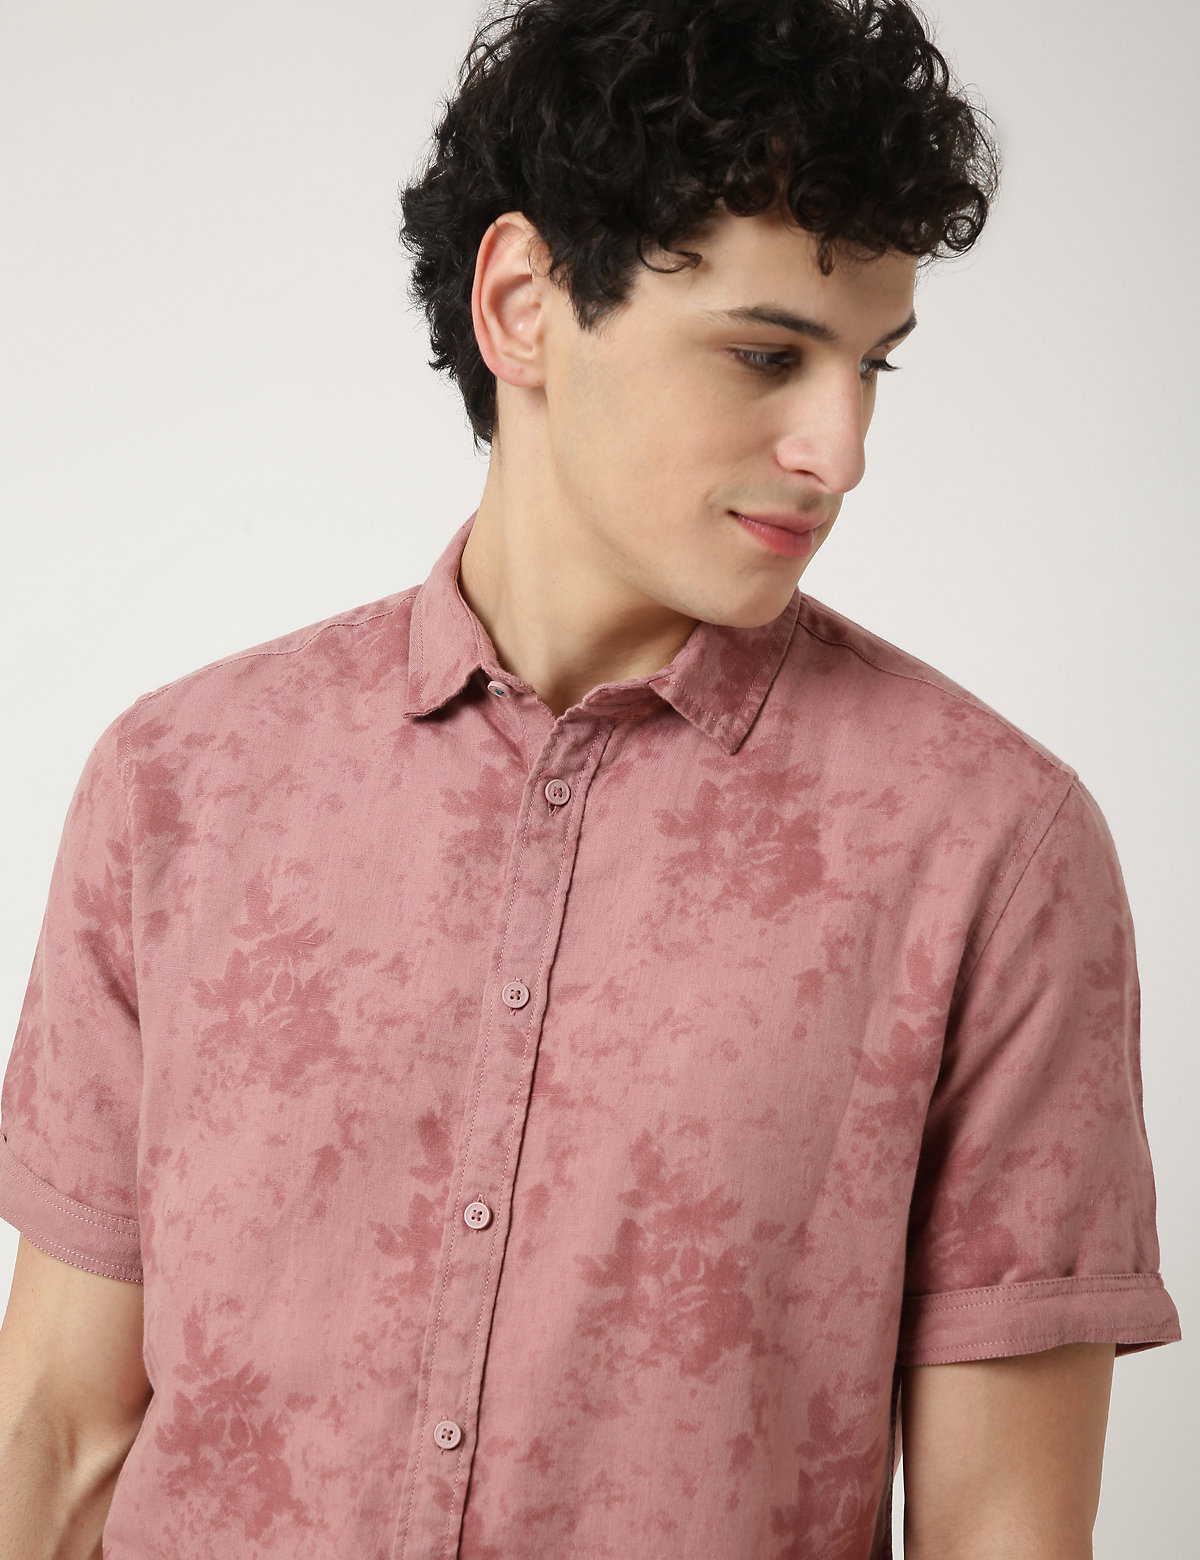 Flax Mix Floral Print Spread Collar Shirt